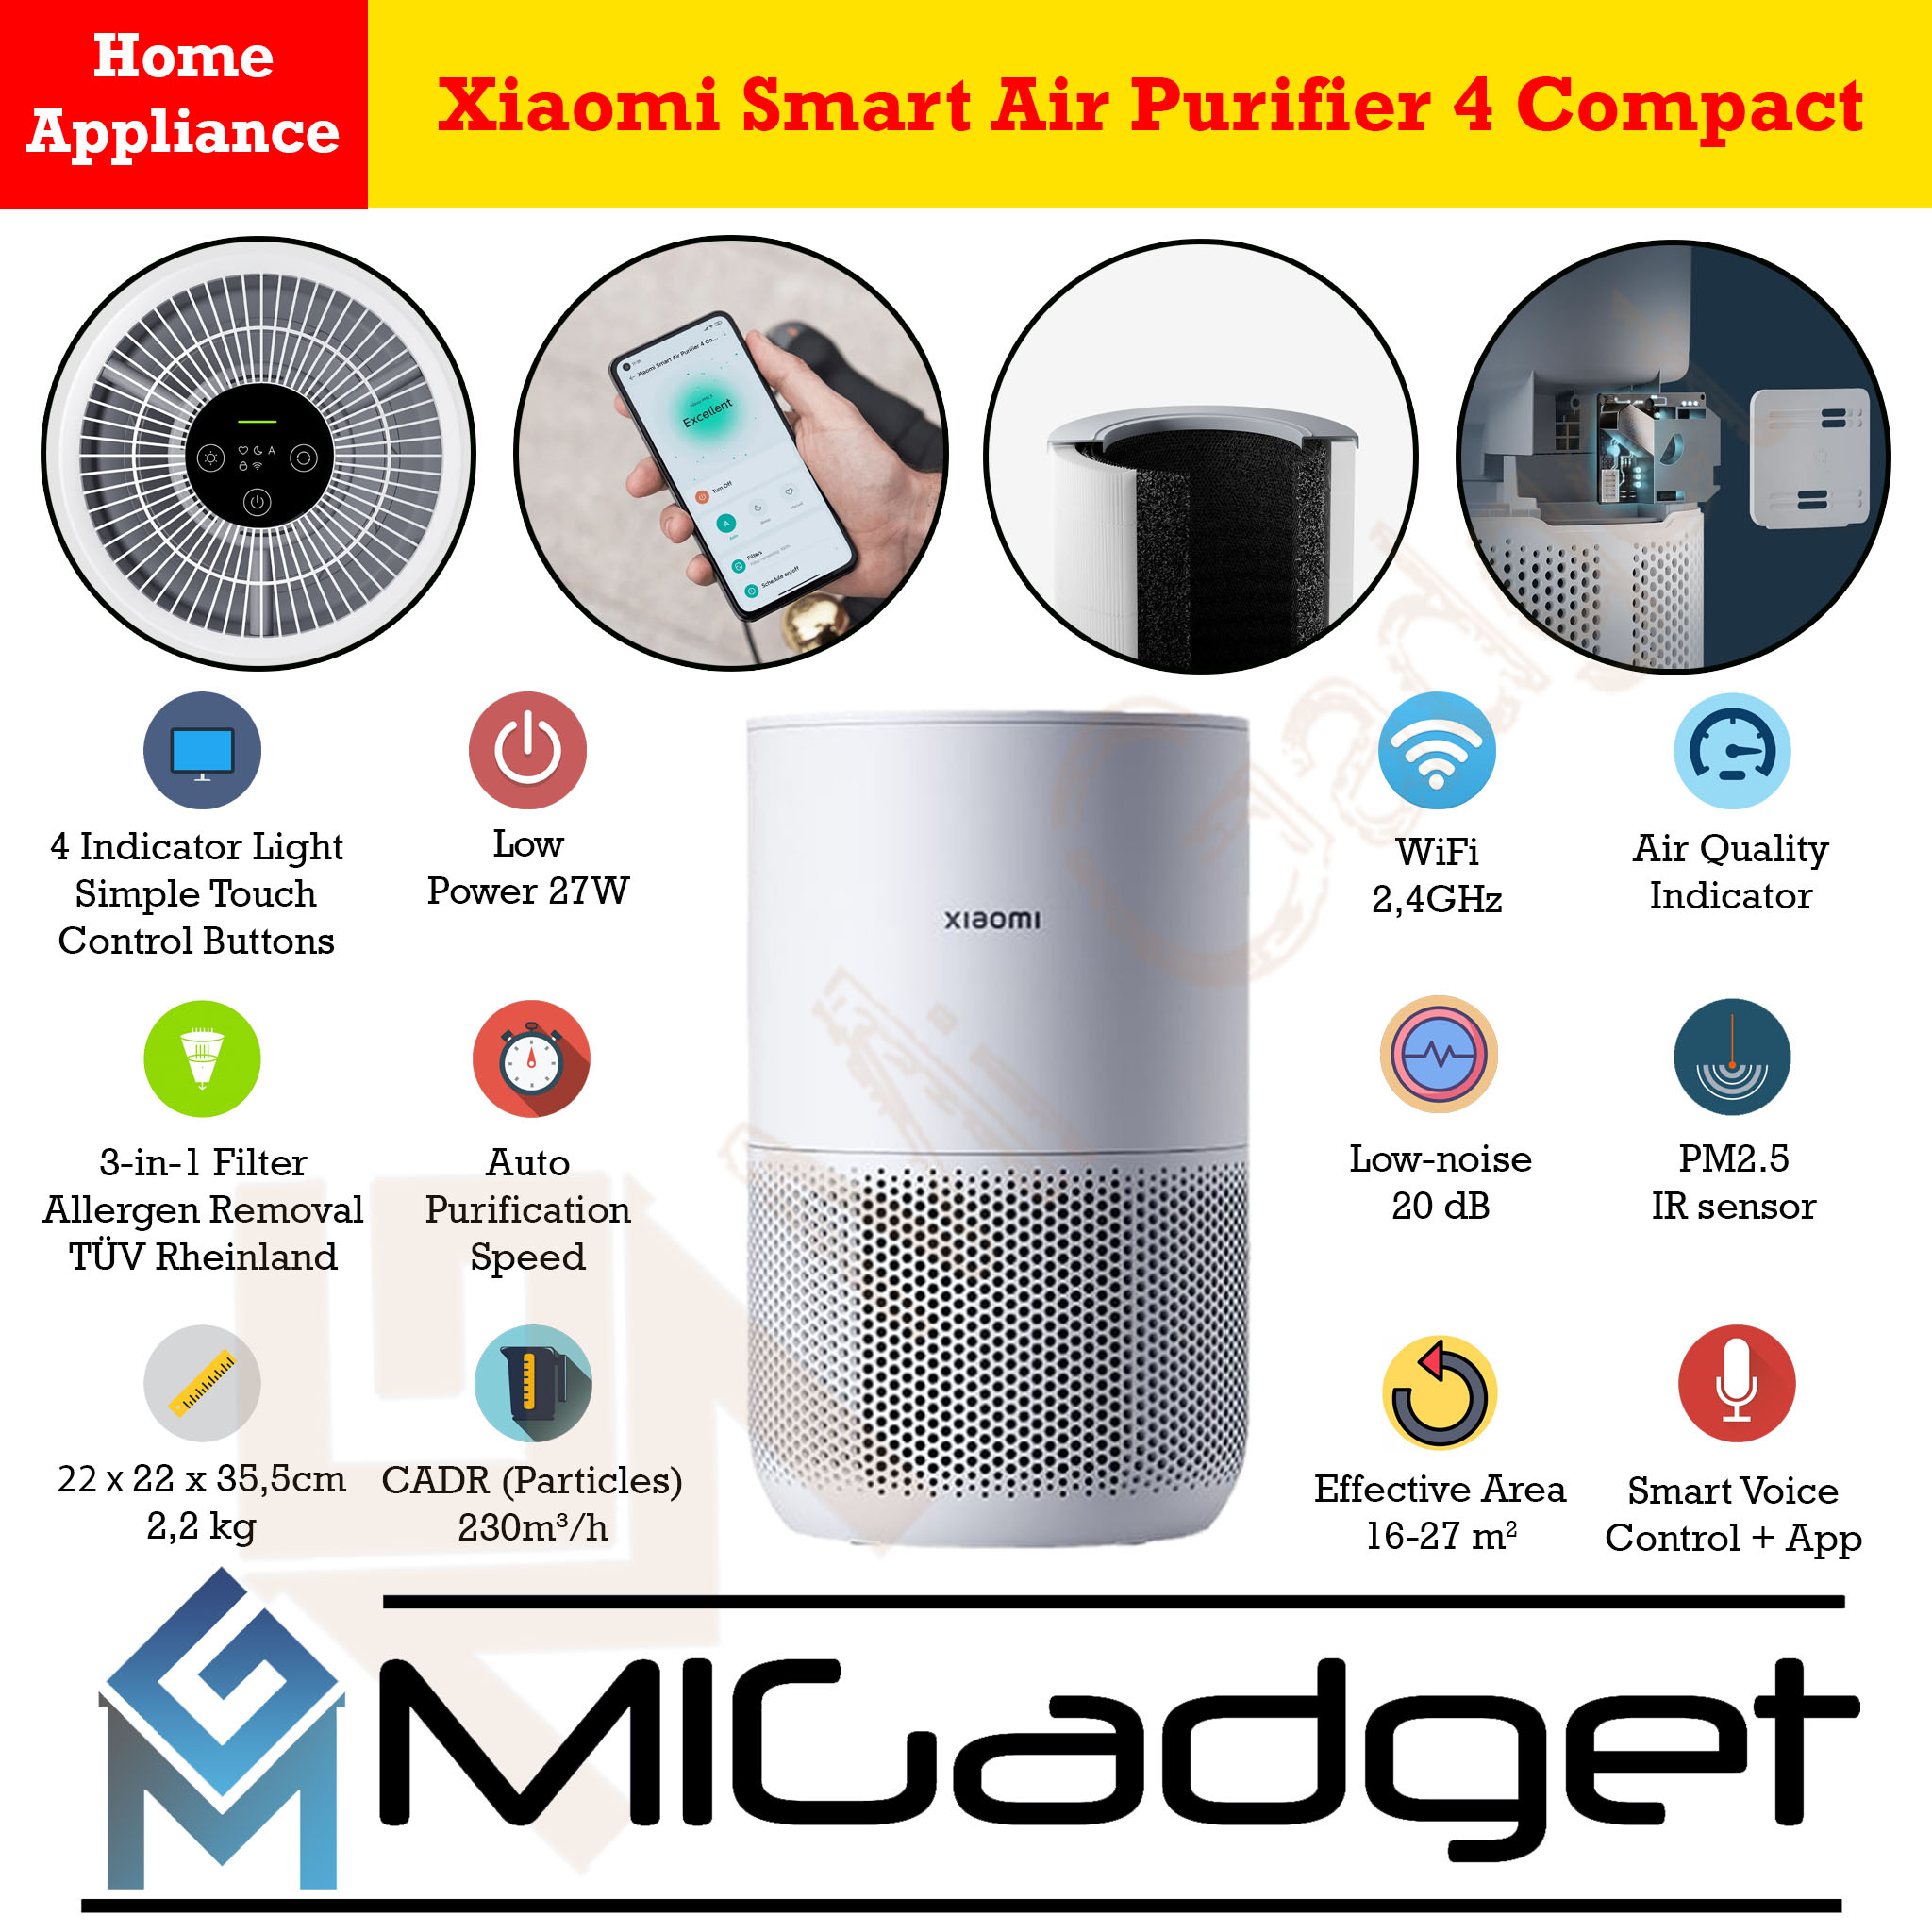 Xiaomi Smart Air Purifier 4 Compact Received TÜV Rheinland Allergy